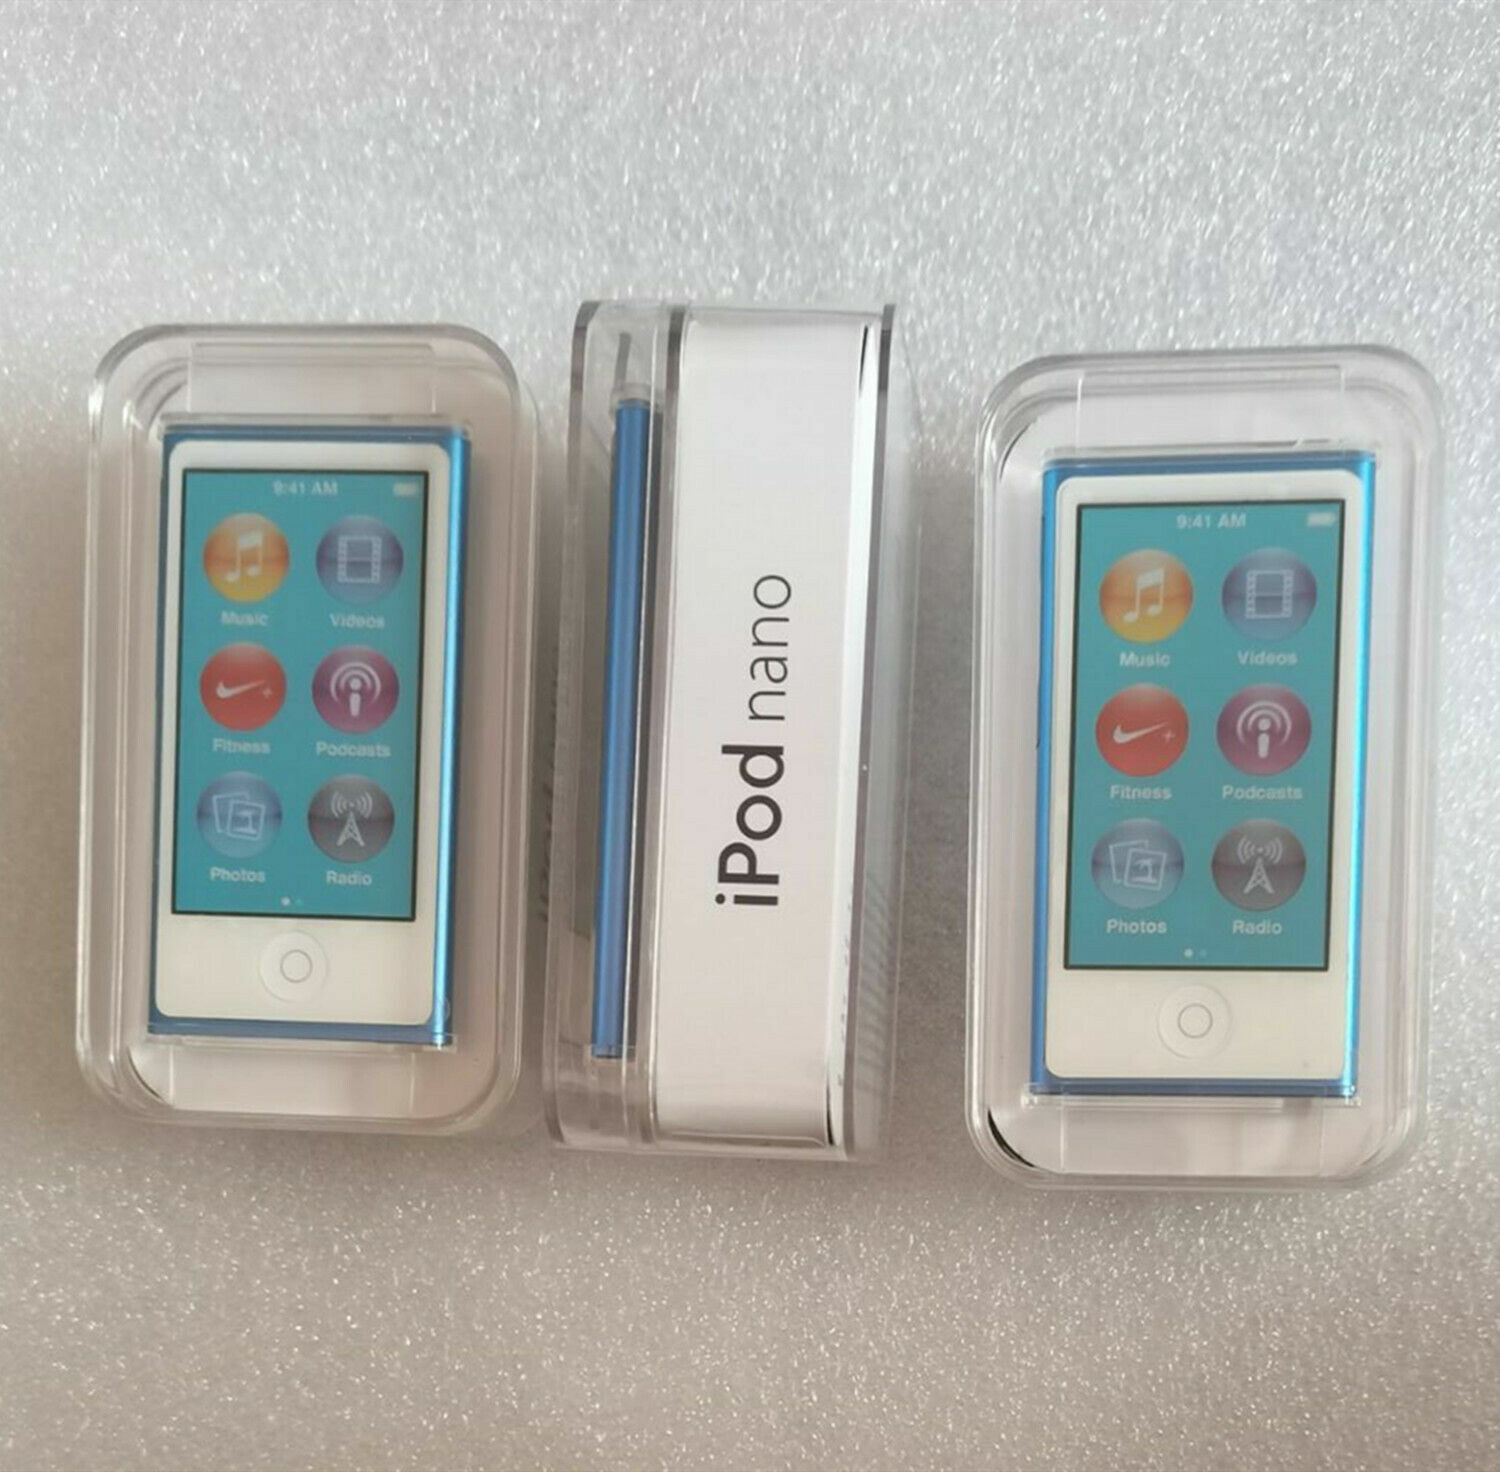 NEW, Apple iPod Nano 7th Generation (16GB) Blue MP3 Player - Sealed Retail  Box